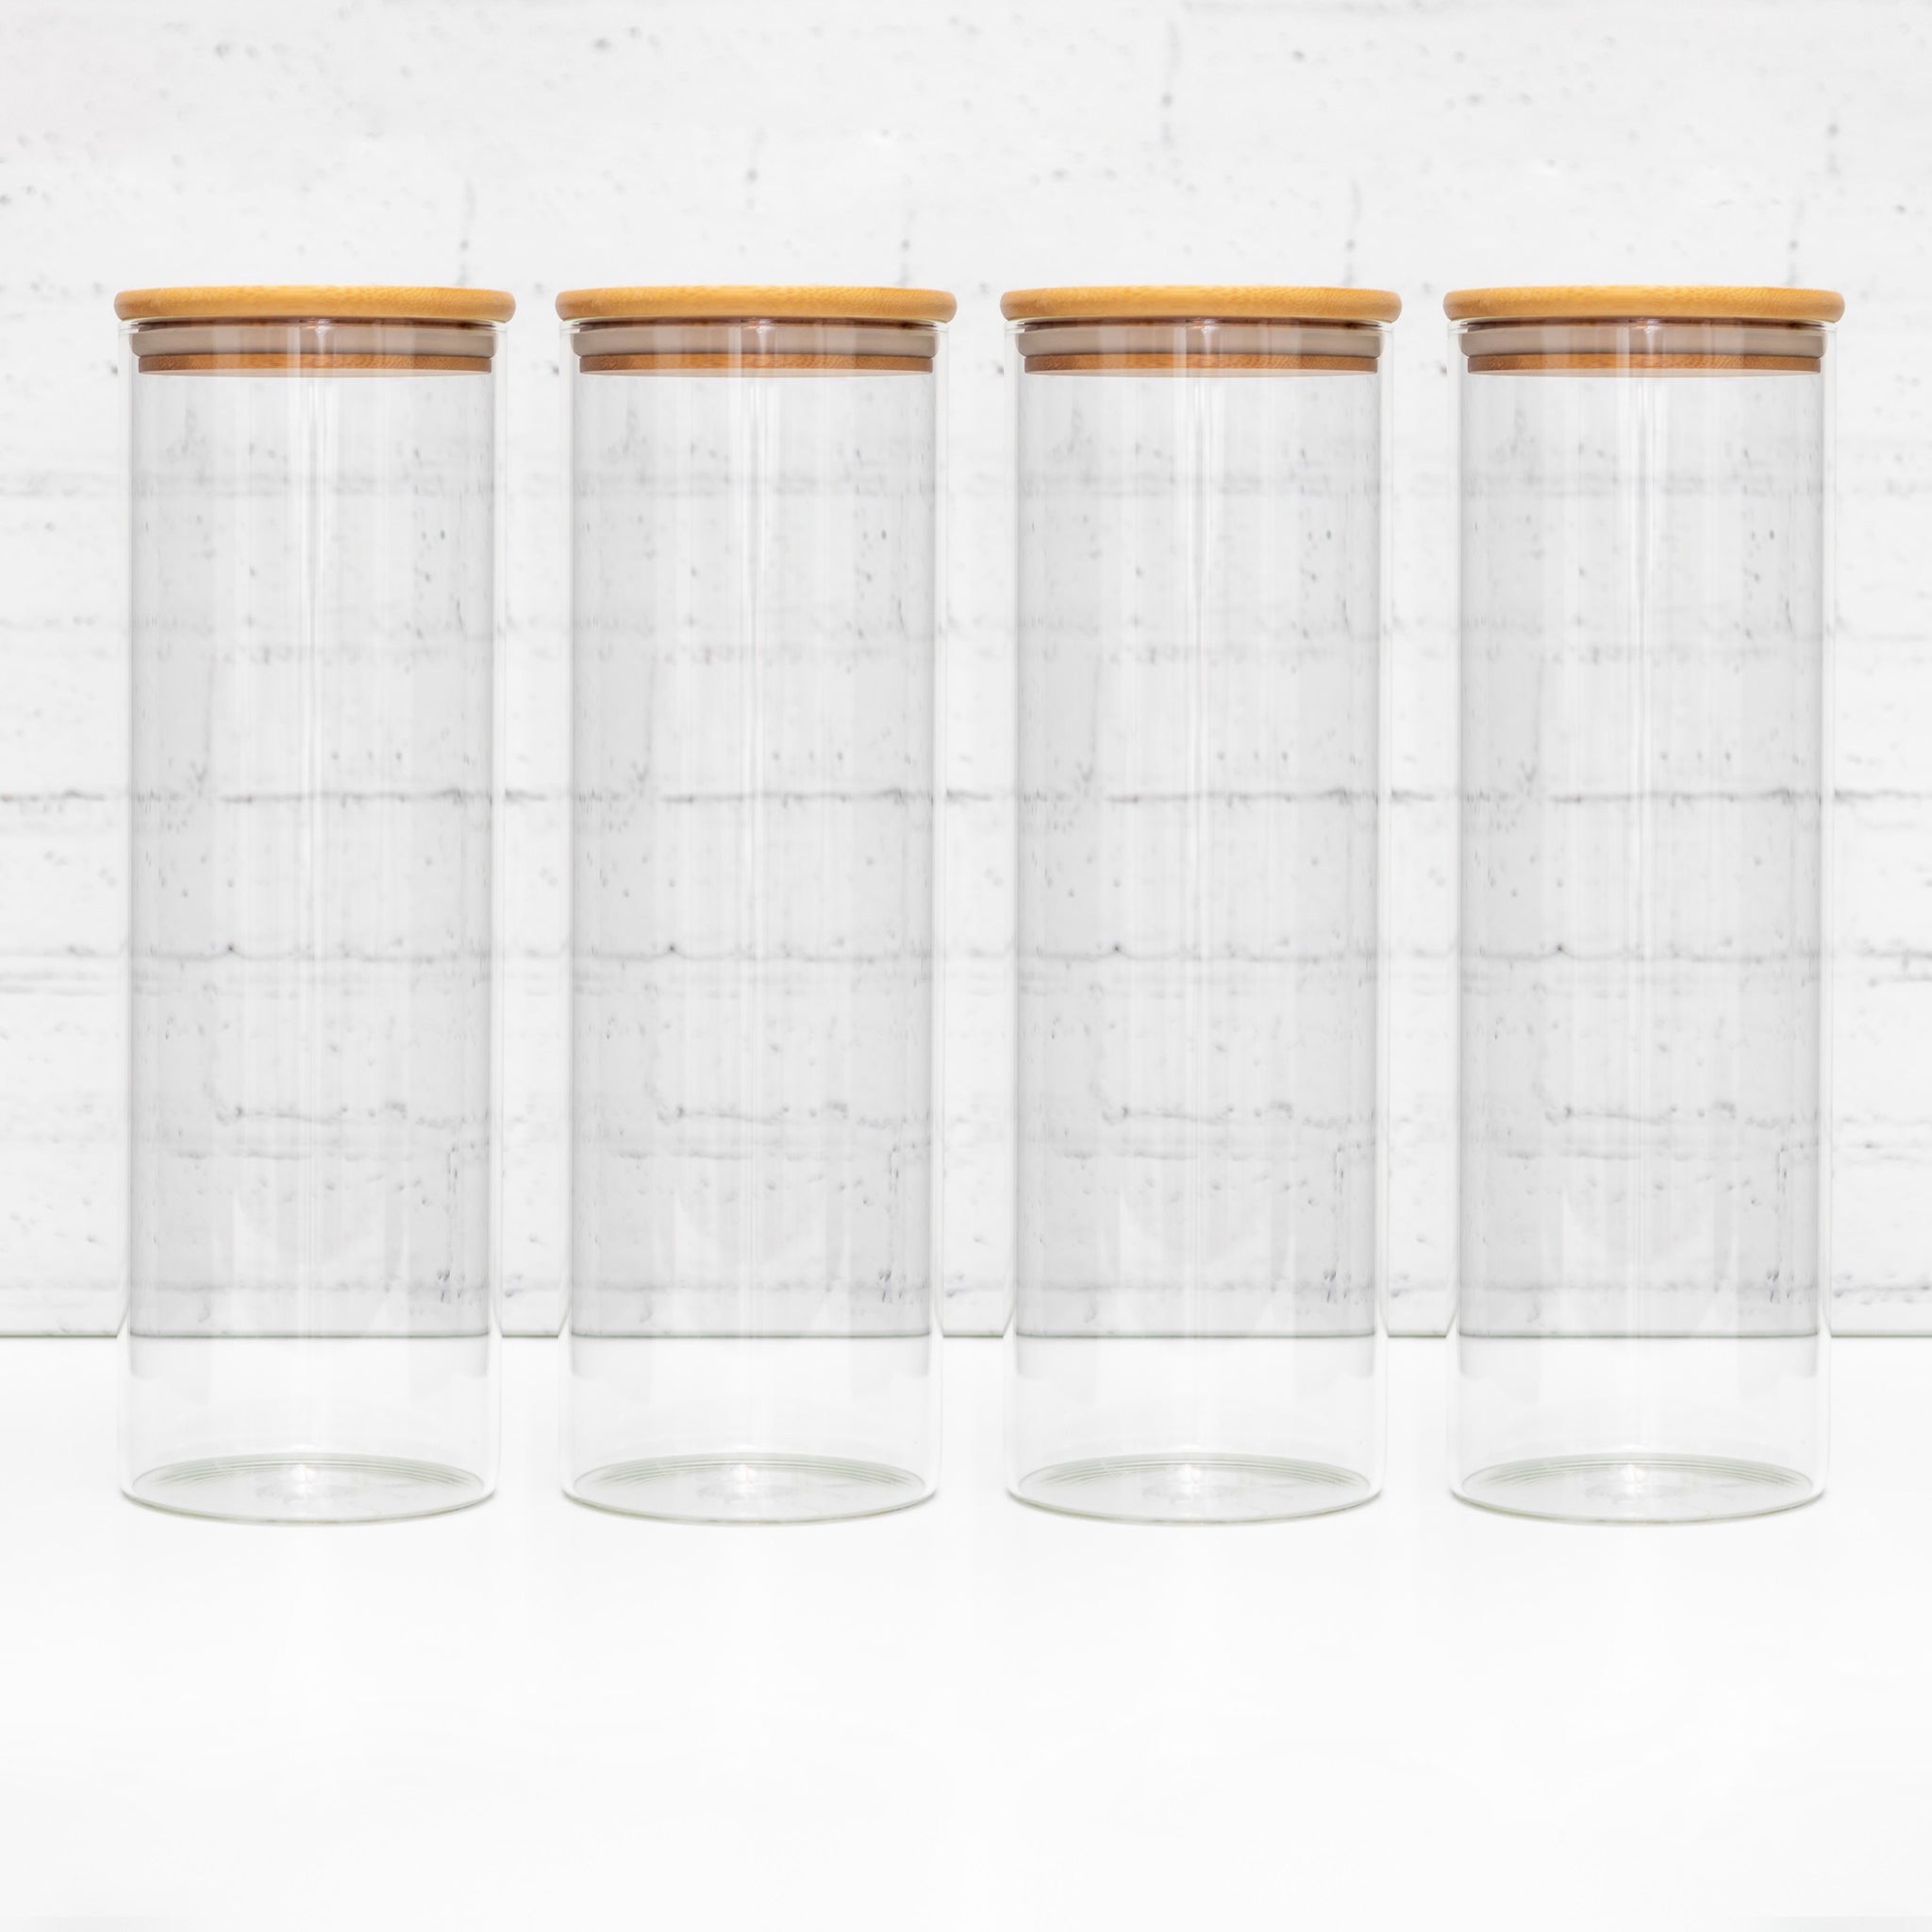 Elegant 1.6L glass canister jar for spaghetti and pasta storage, showcasing a sleek, clear design - Pretty Little Designs.